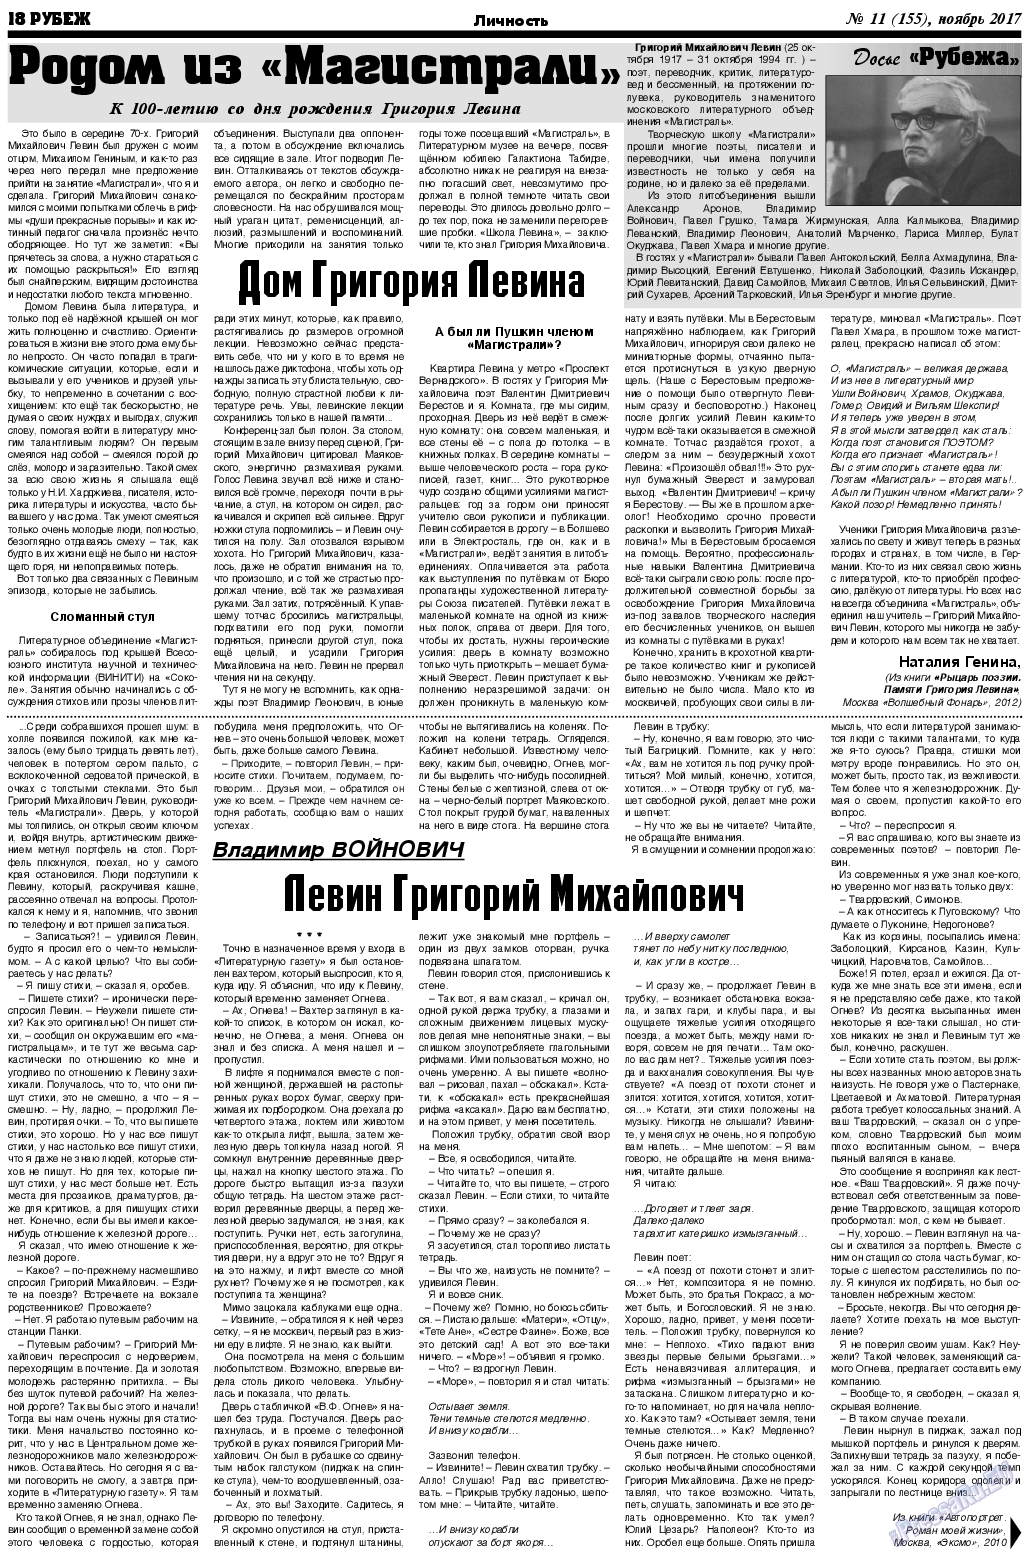 Рубеж, газета. 2017 №11 стр.18